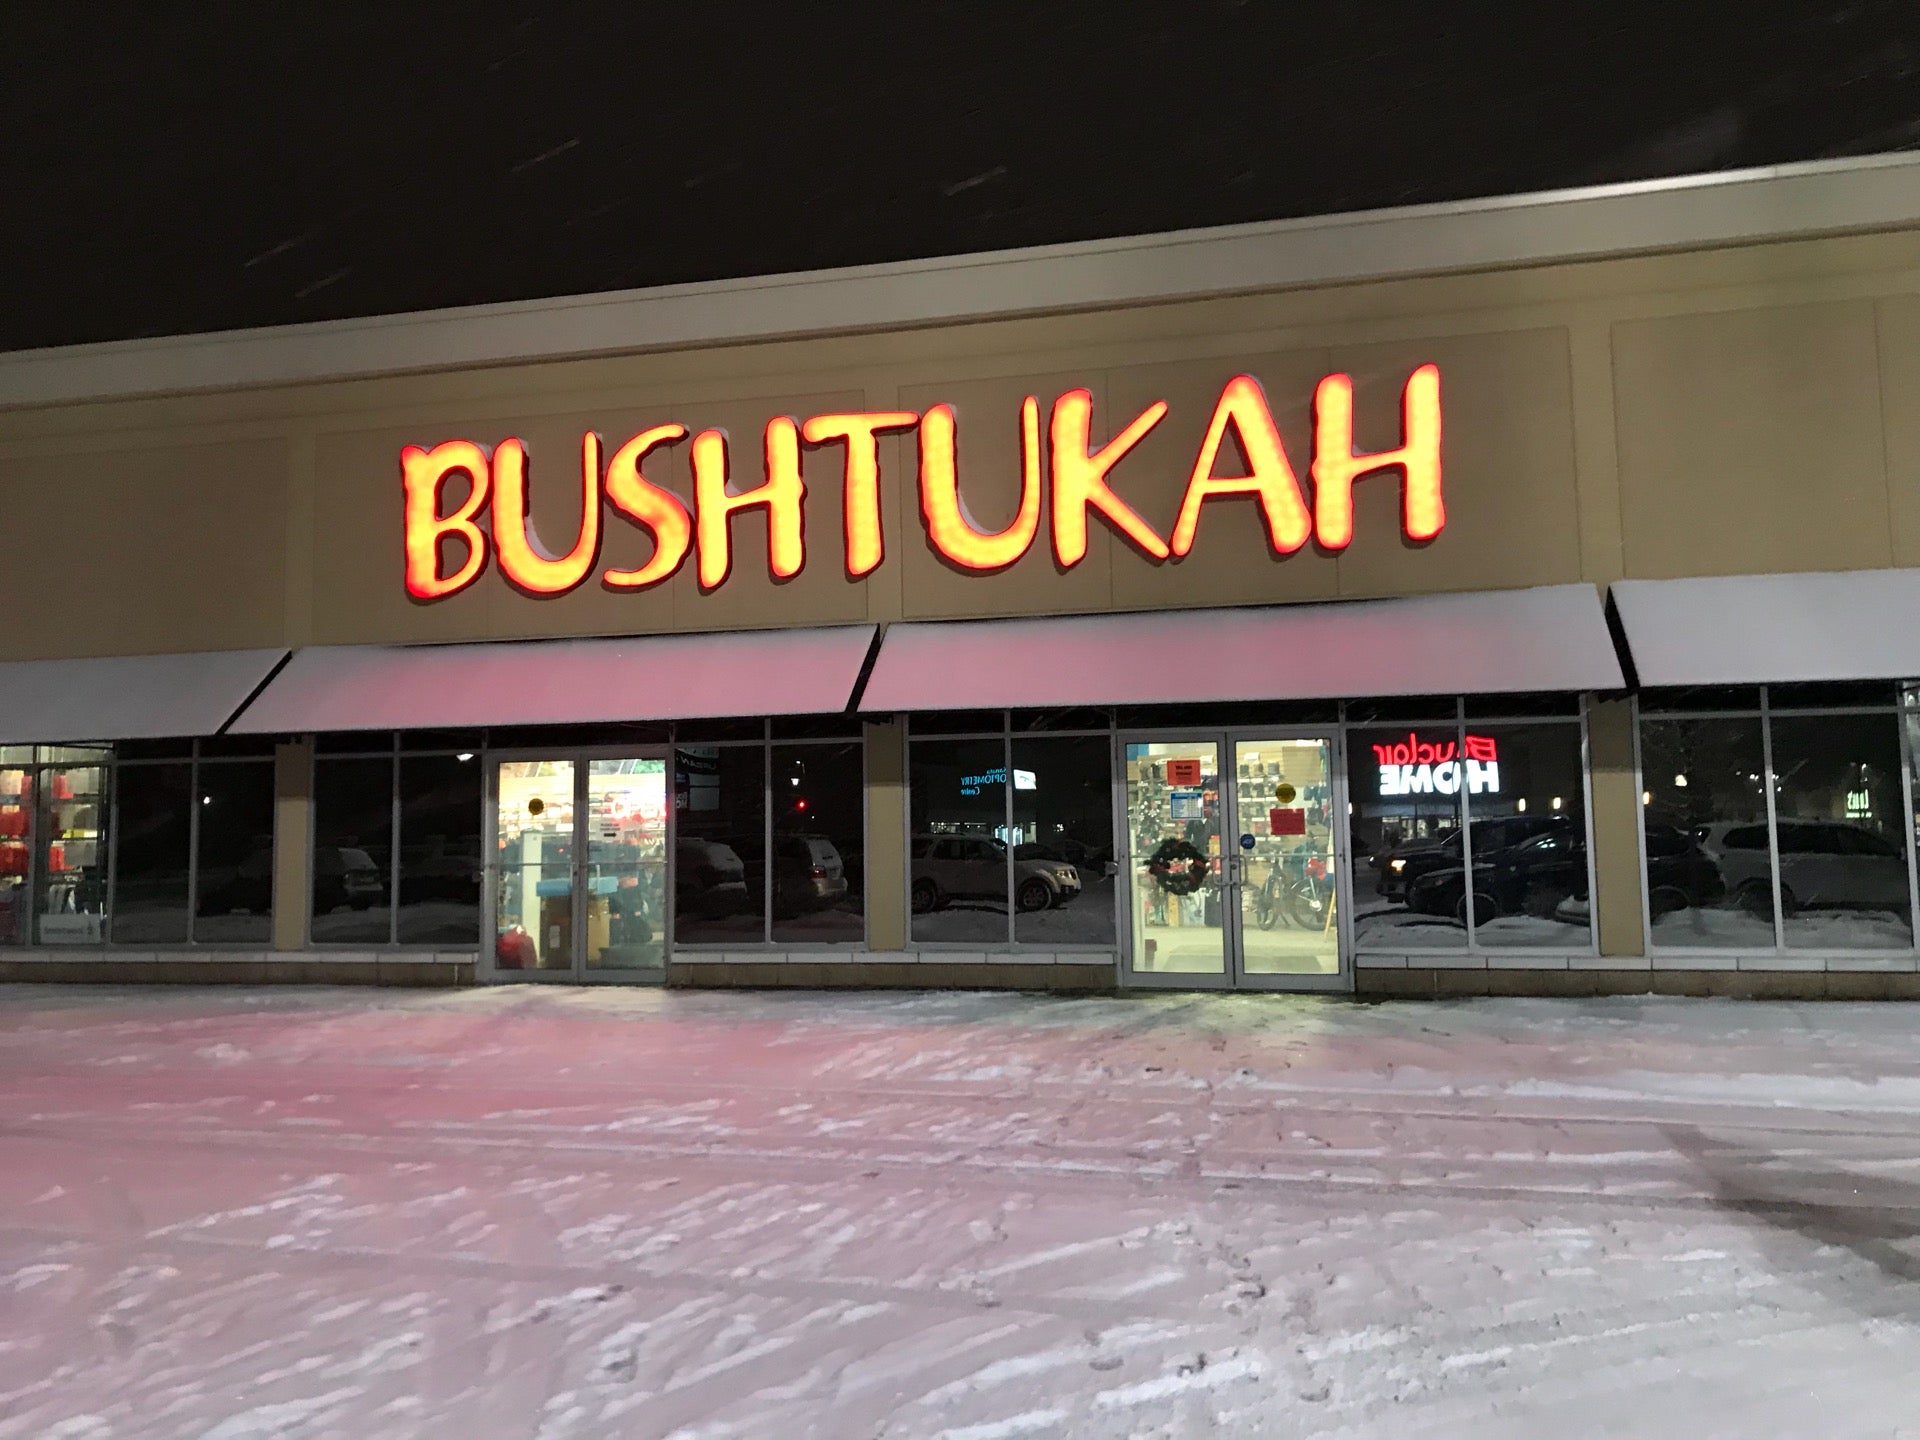 Bushtukah Inc: opening hours & services